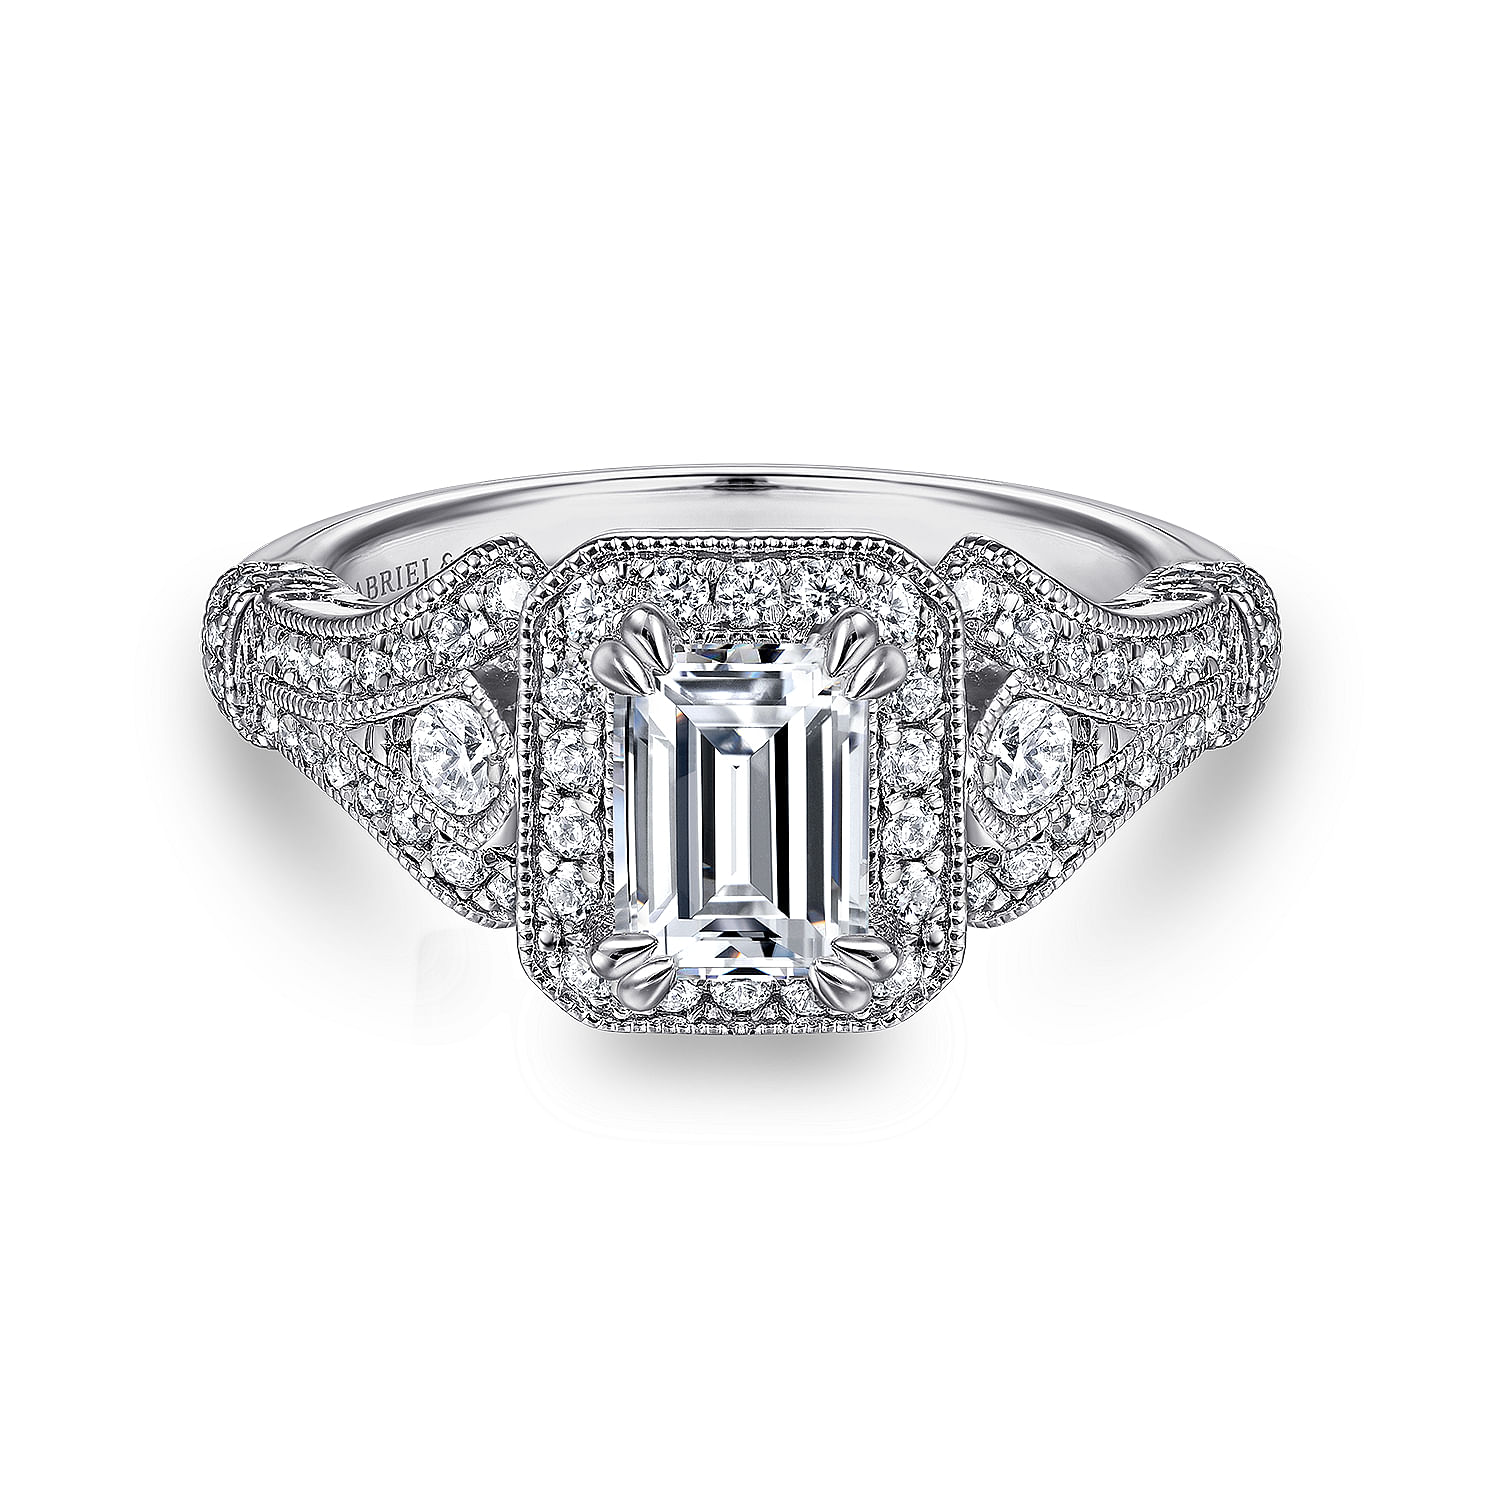 Delilah - Vintage Inspired 14K White Gold Halo Emerald Cut Diamond Engagement Ring